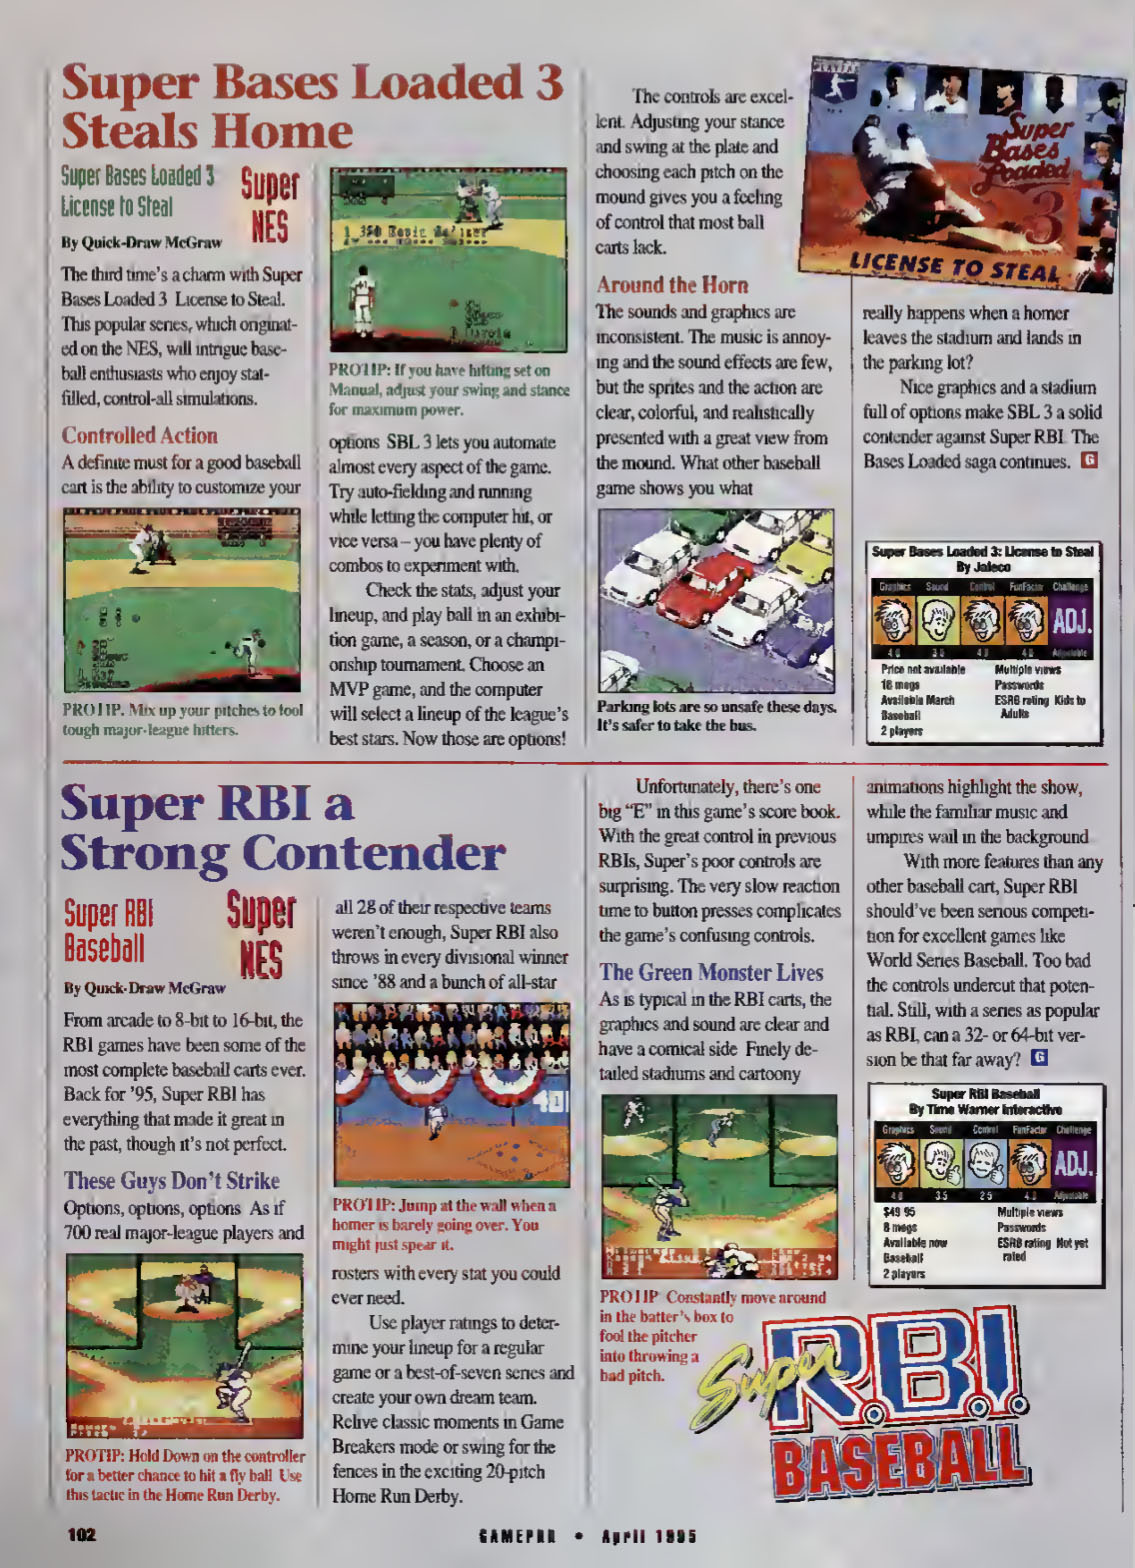 Super Bases Loaded 3 Steals Home, GamePro April 1995 page 102